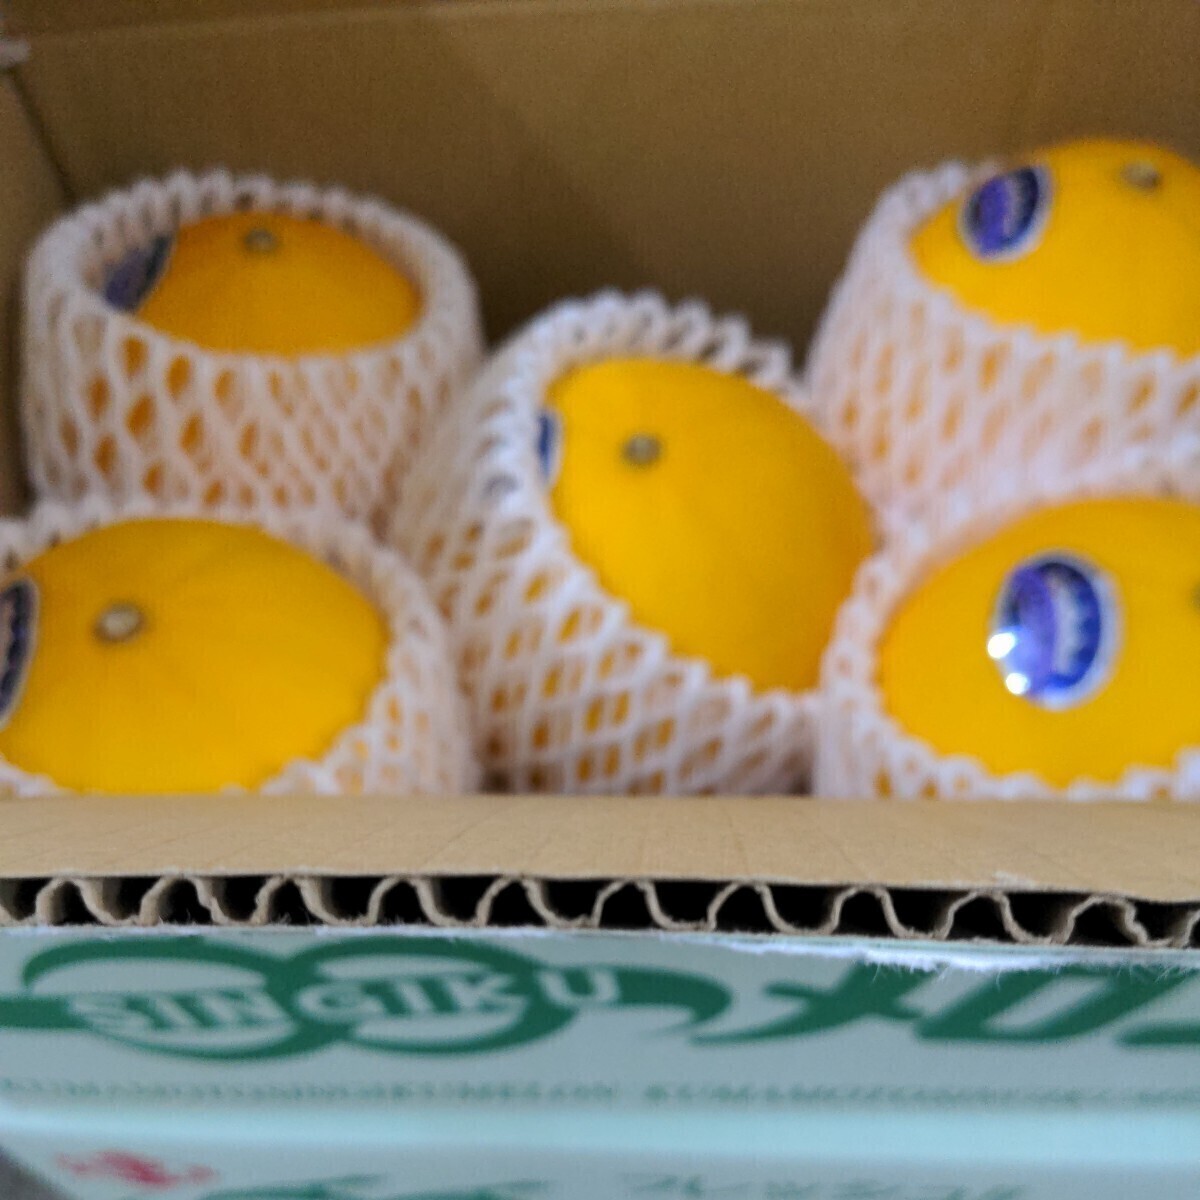  Kumamoto prefecture production [ yellow King melon ]4 sphere ~5 sphere entering 